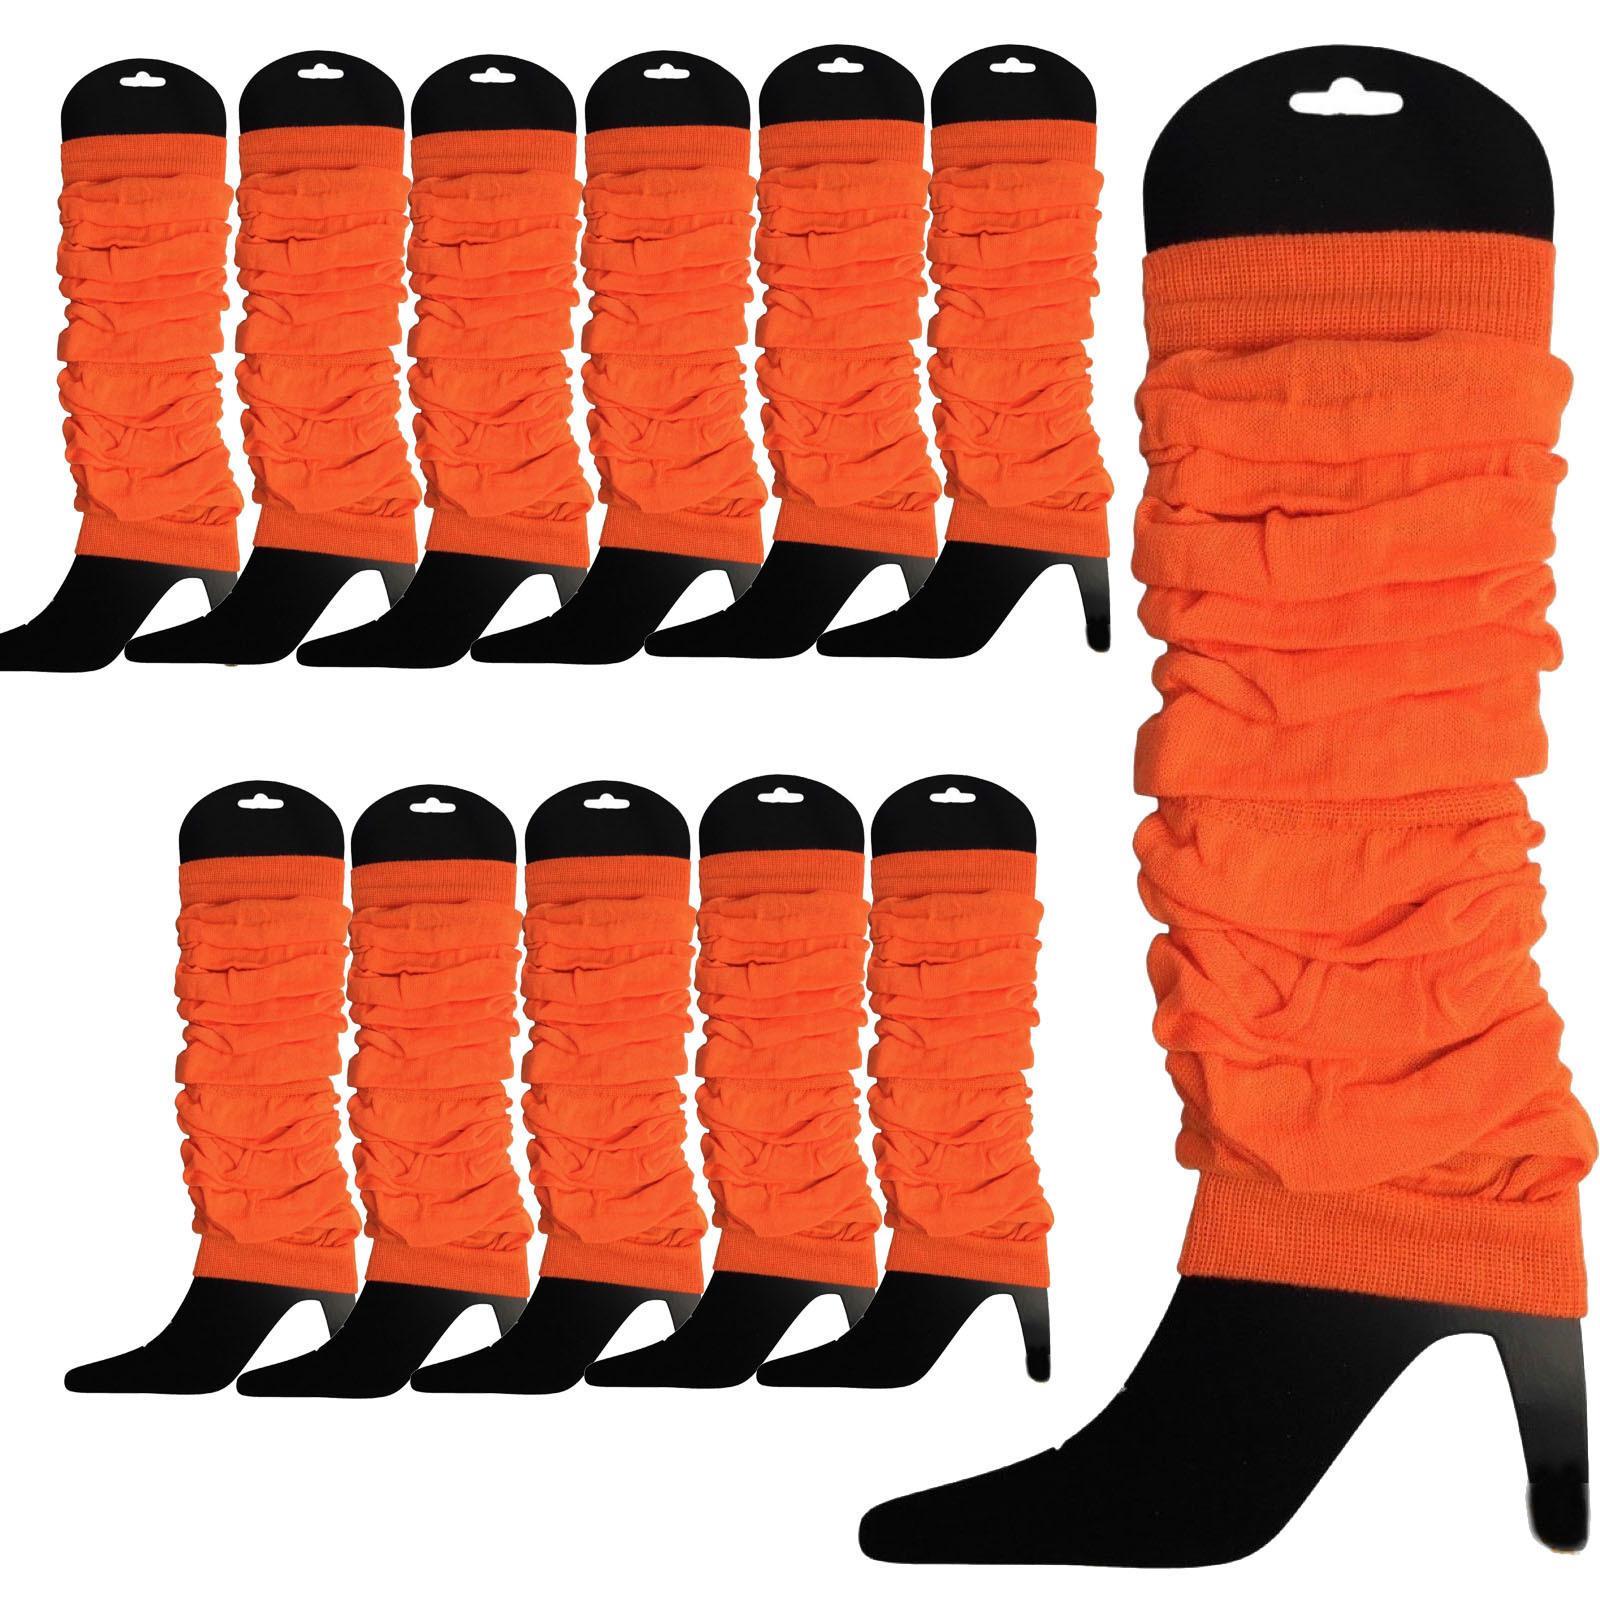 12 LEG WARMERS Knitted Womens Neon Party Knit Ankle Fluro Dance Costume 80s BULK - Fluro Orange